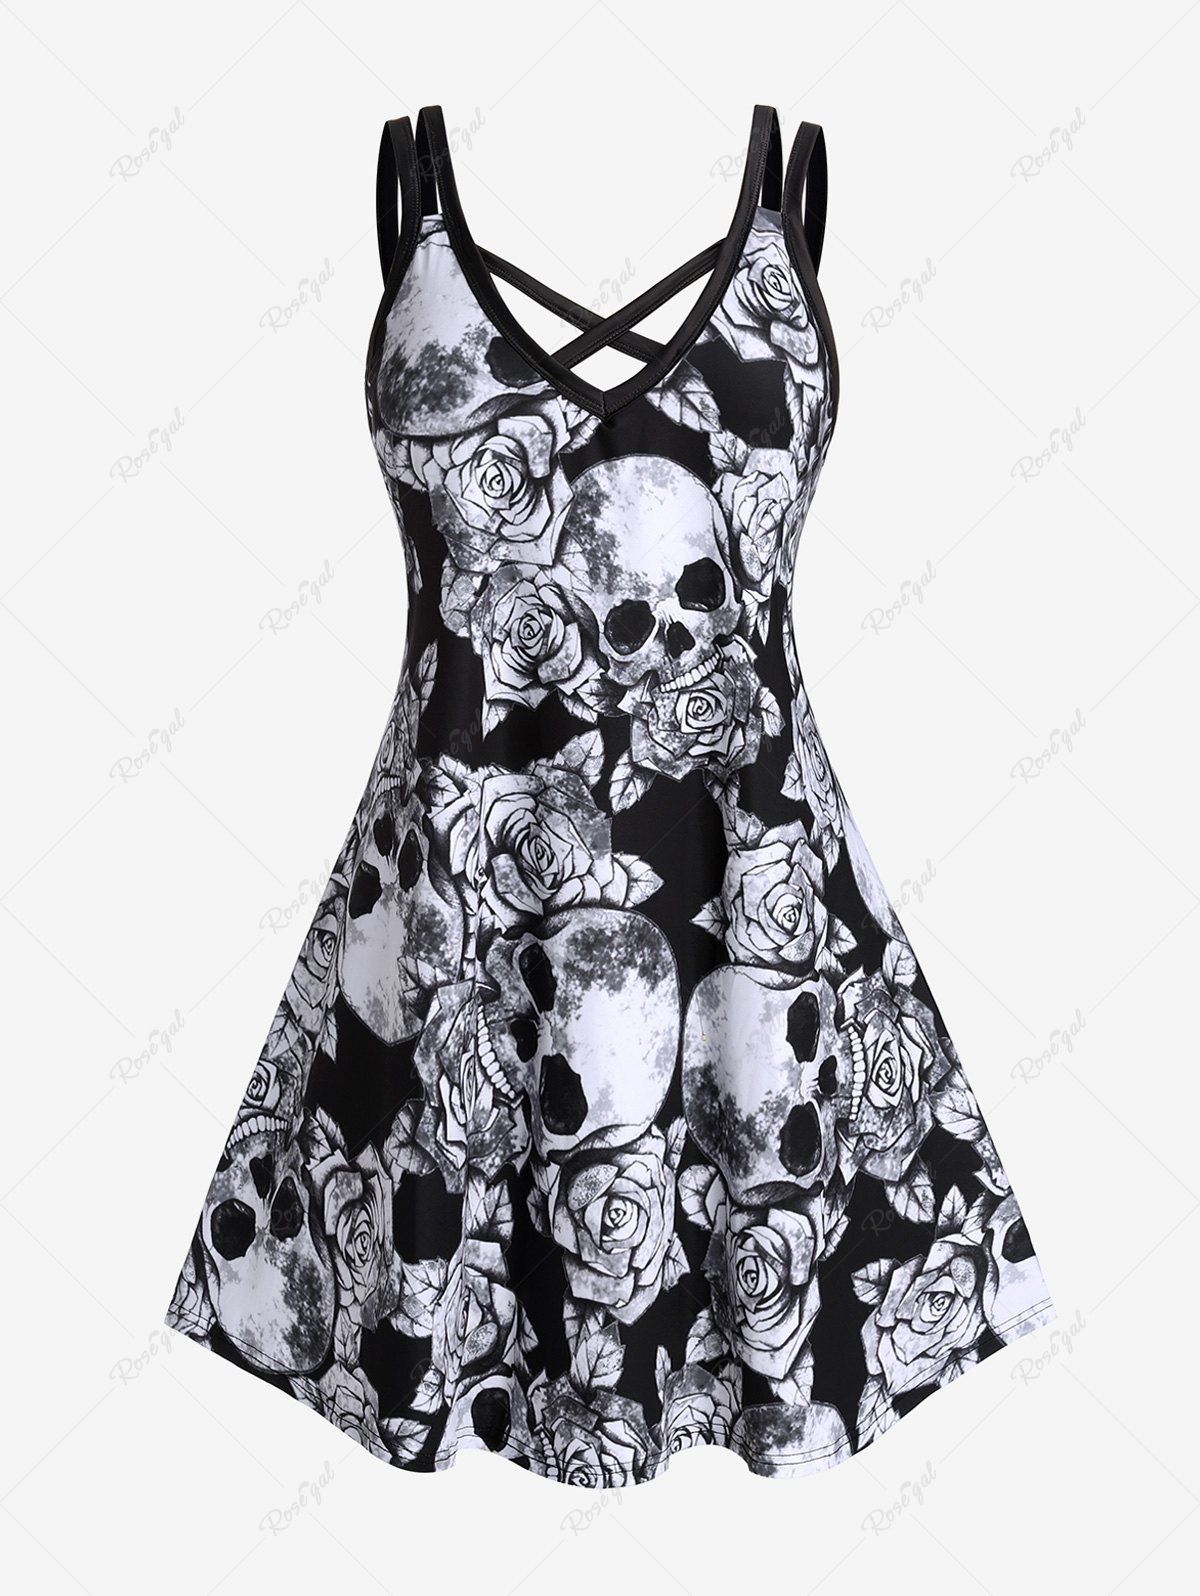 Trendy Plus Size & Curve Skull Rose Print Crisscross Gothic Dress  